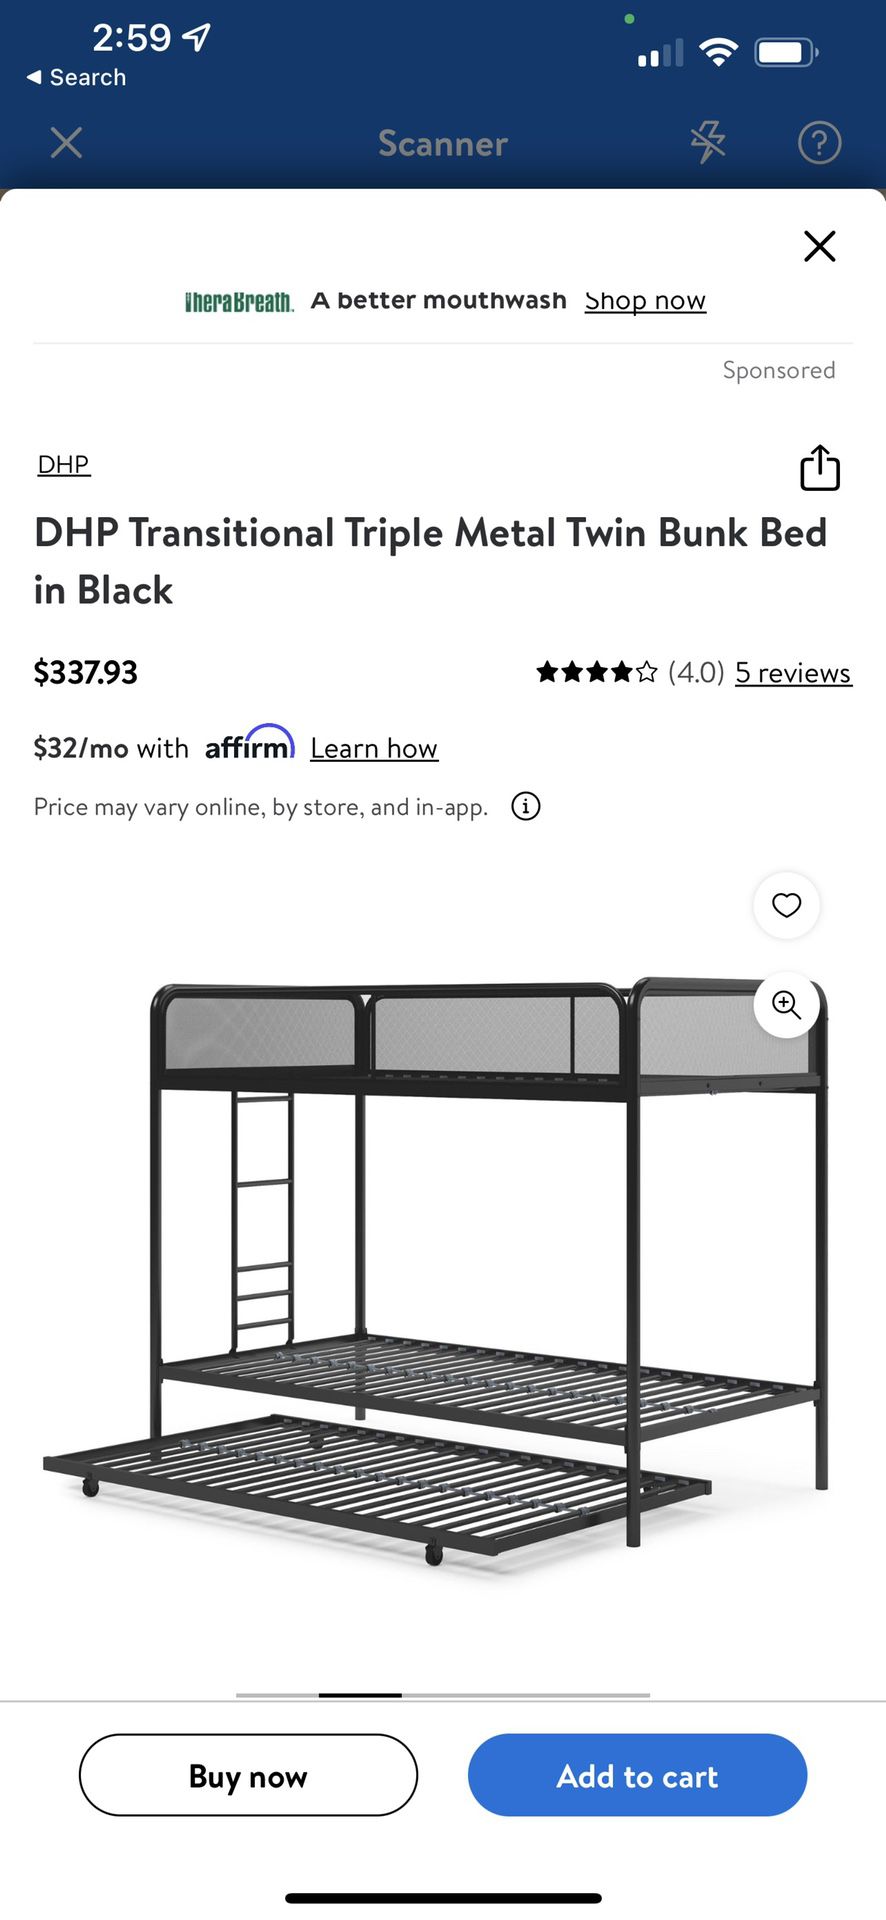 Brand NEW Black Triple Metal Bunk Bed!